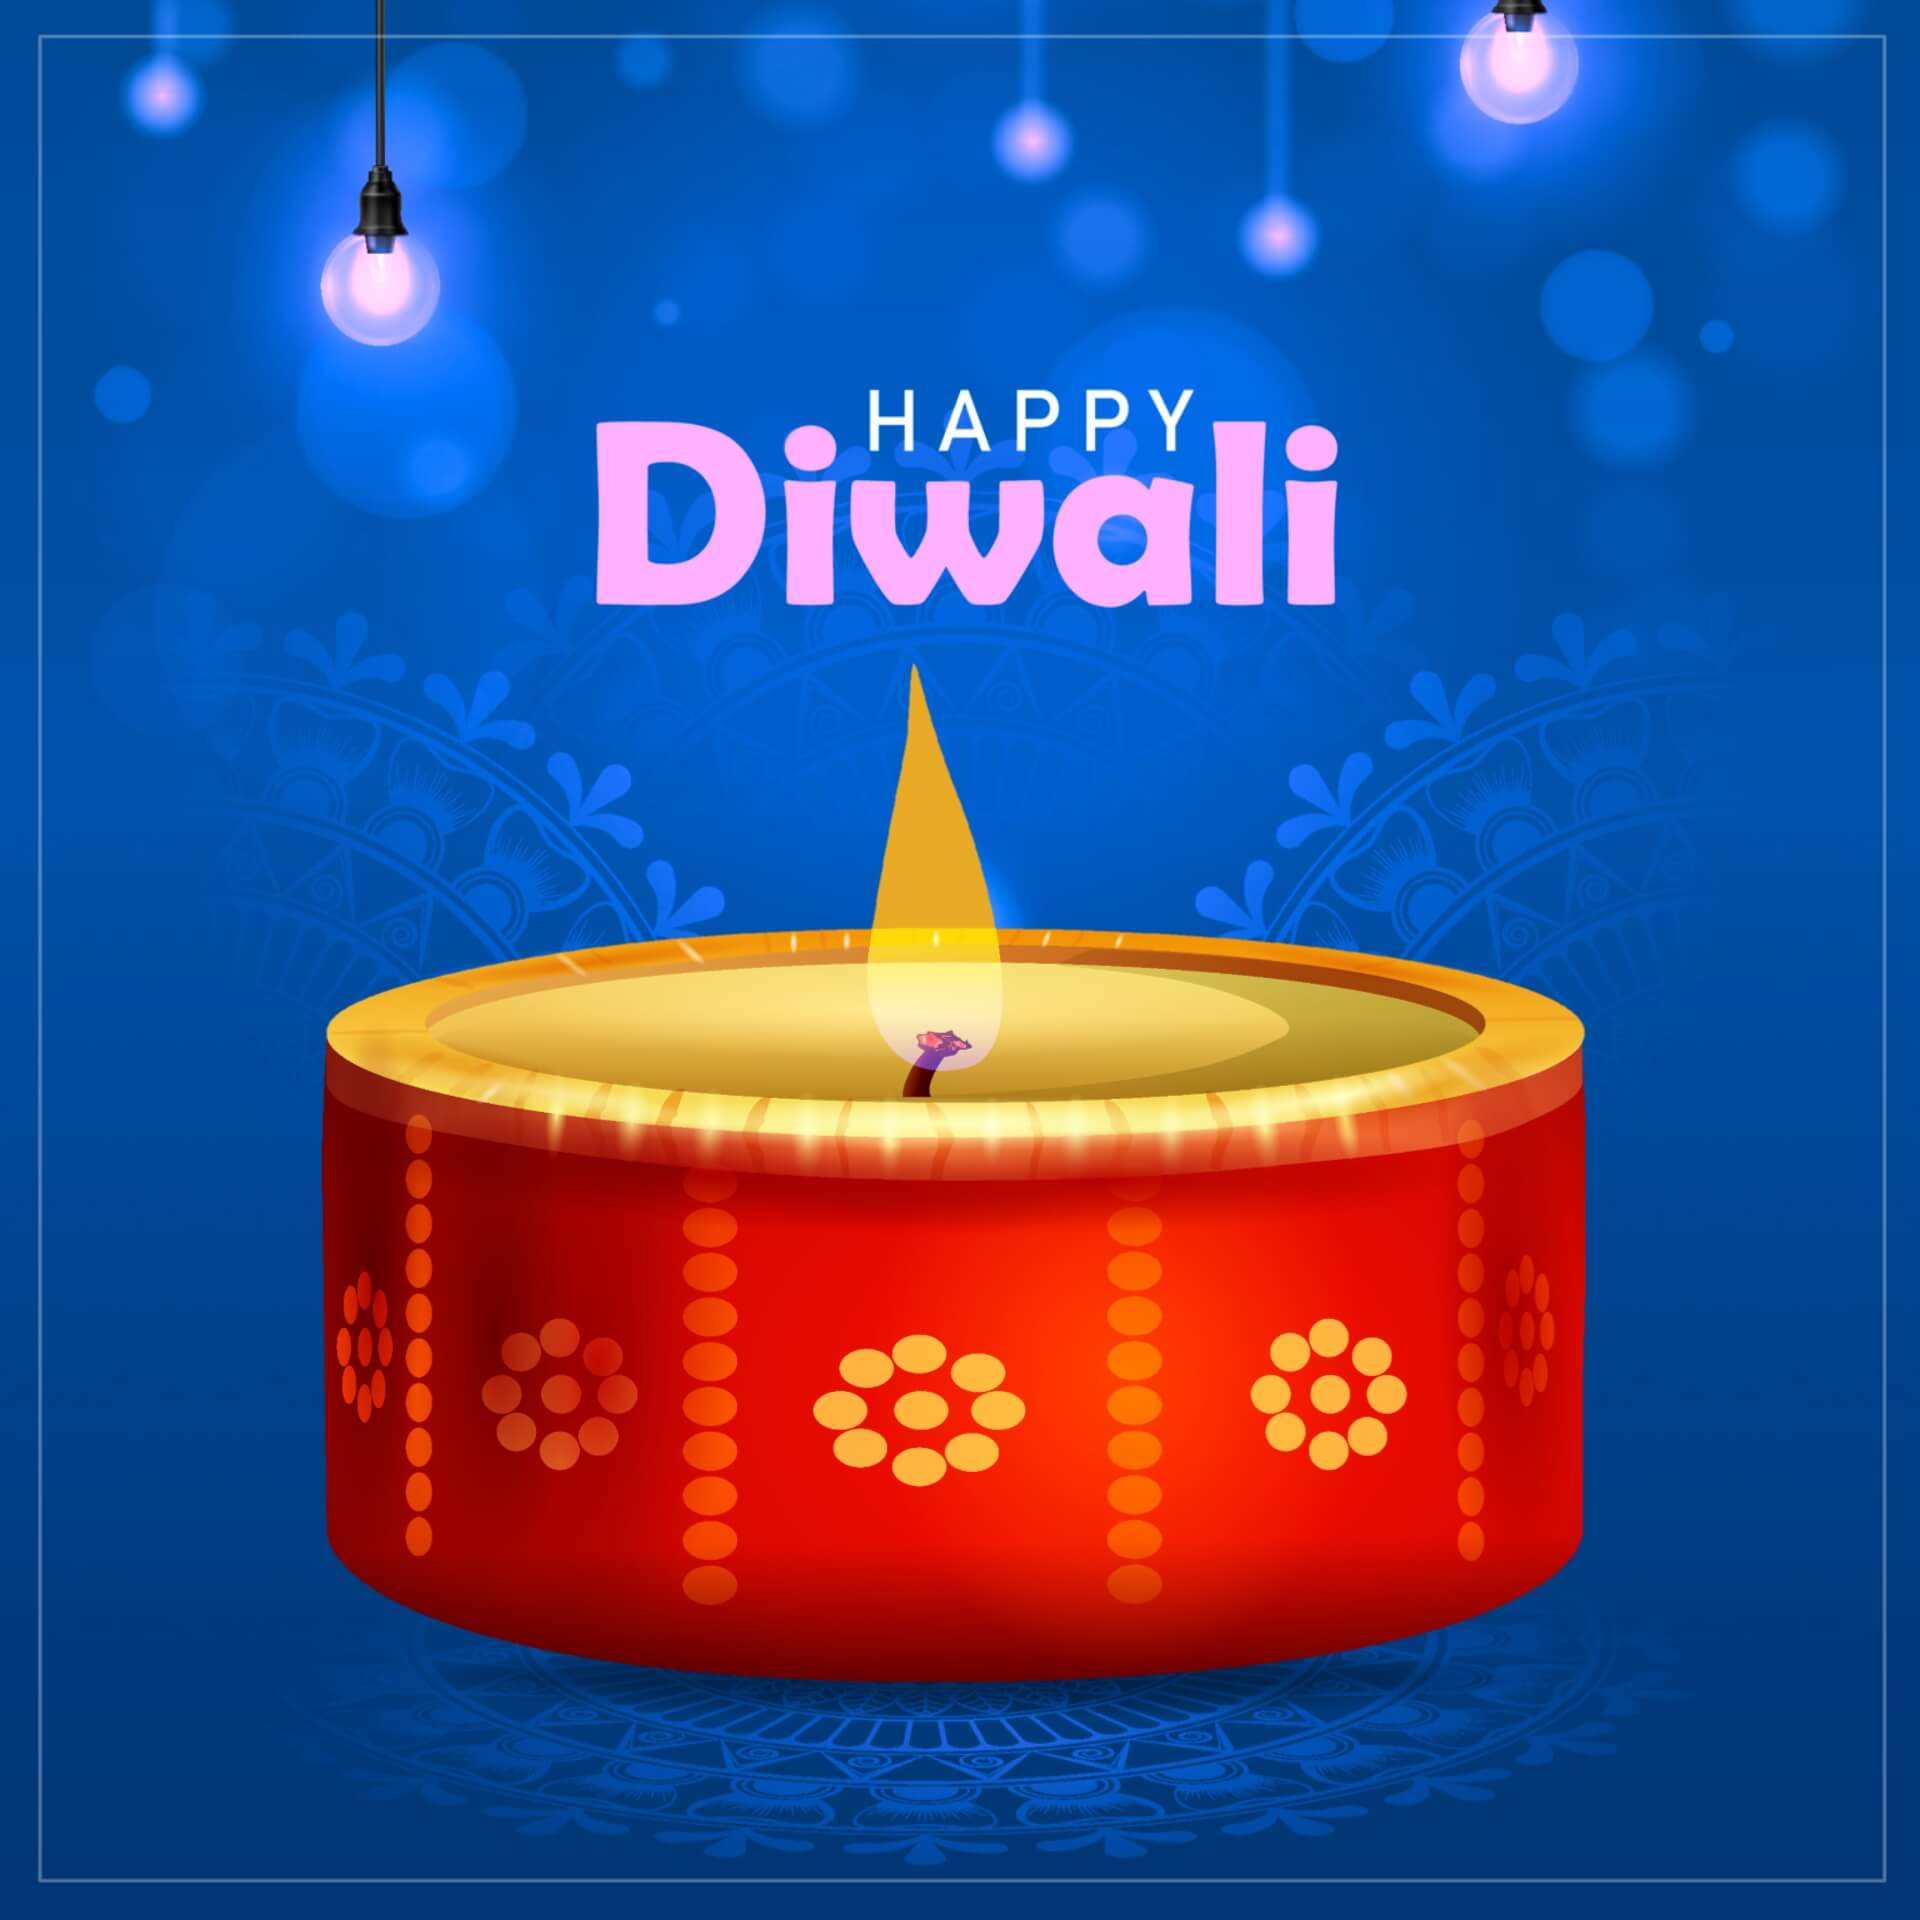 Happy Diwali Image 